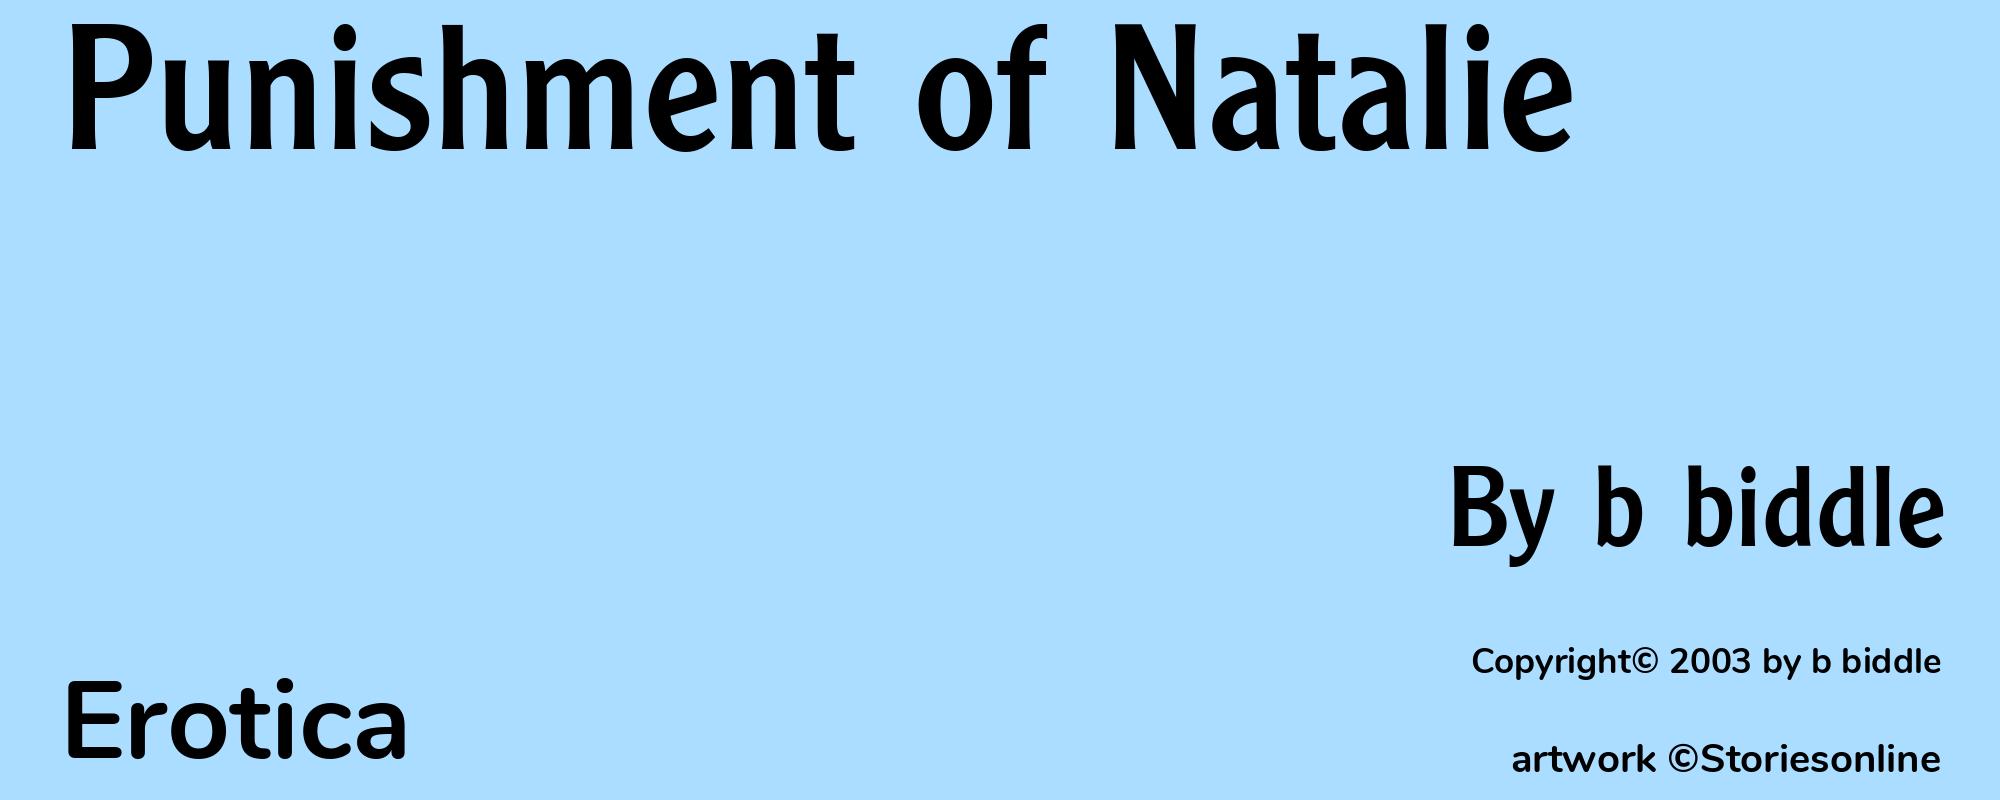 Punishment of Natalie - Cover